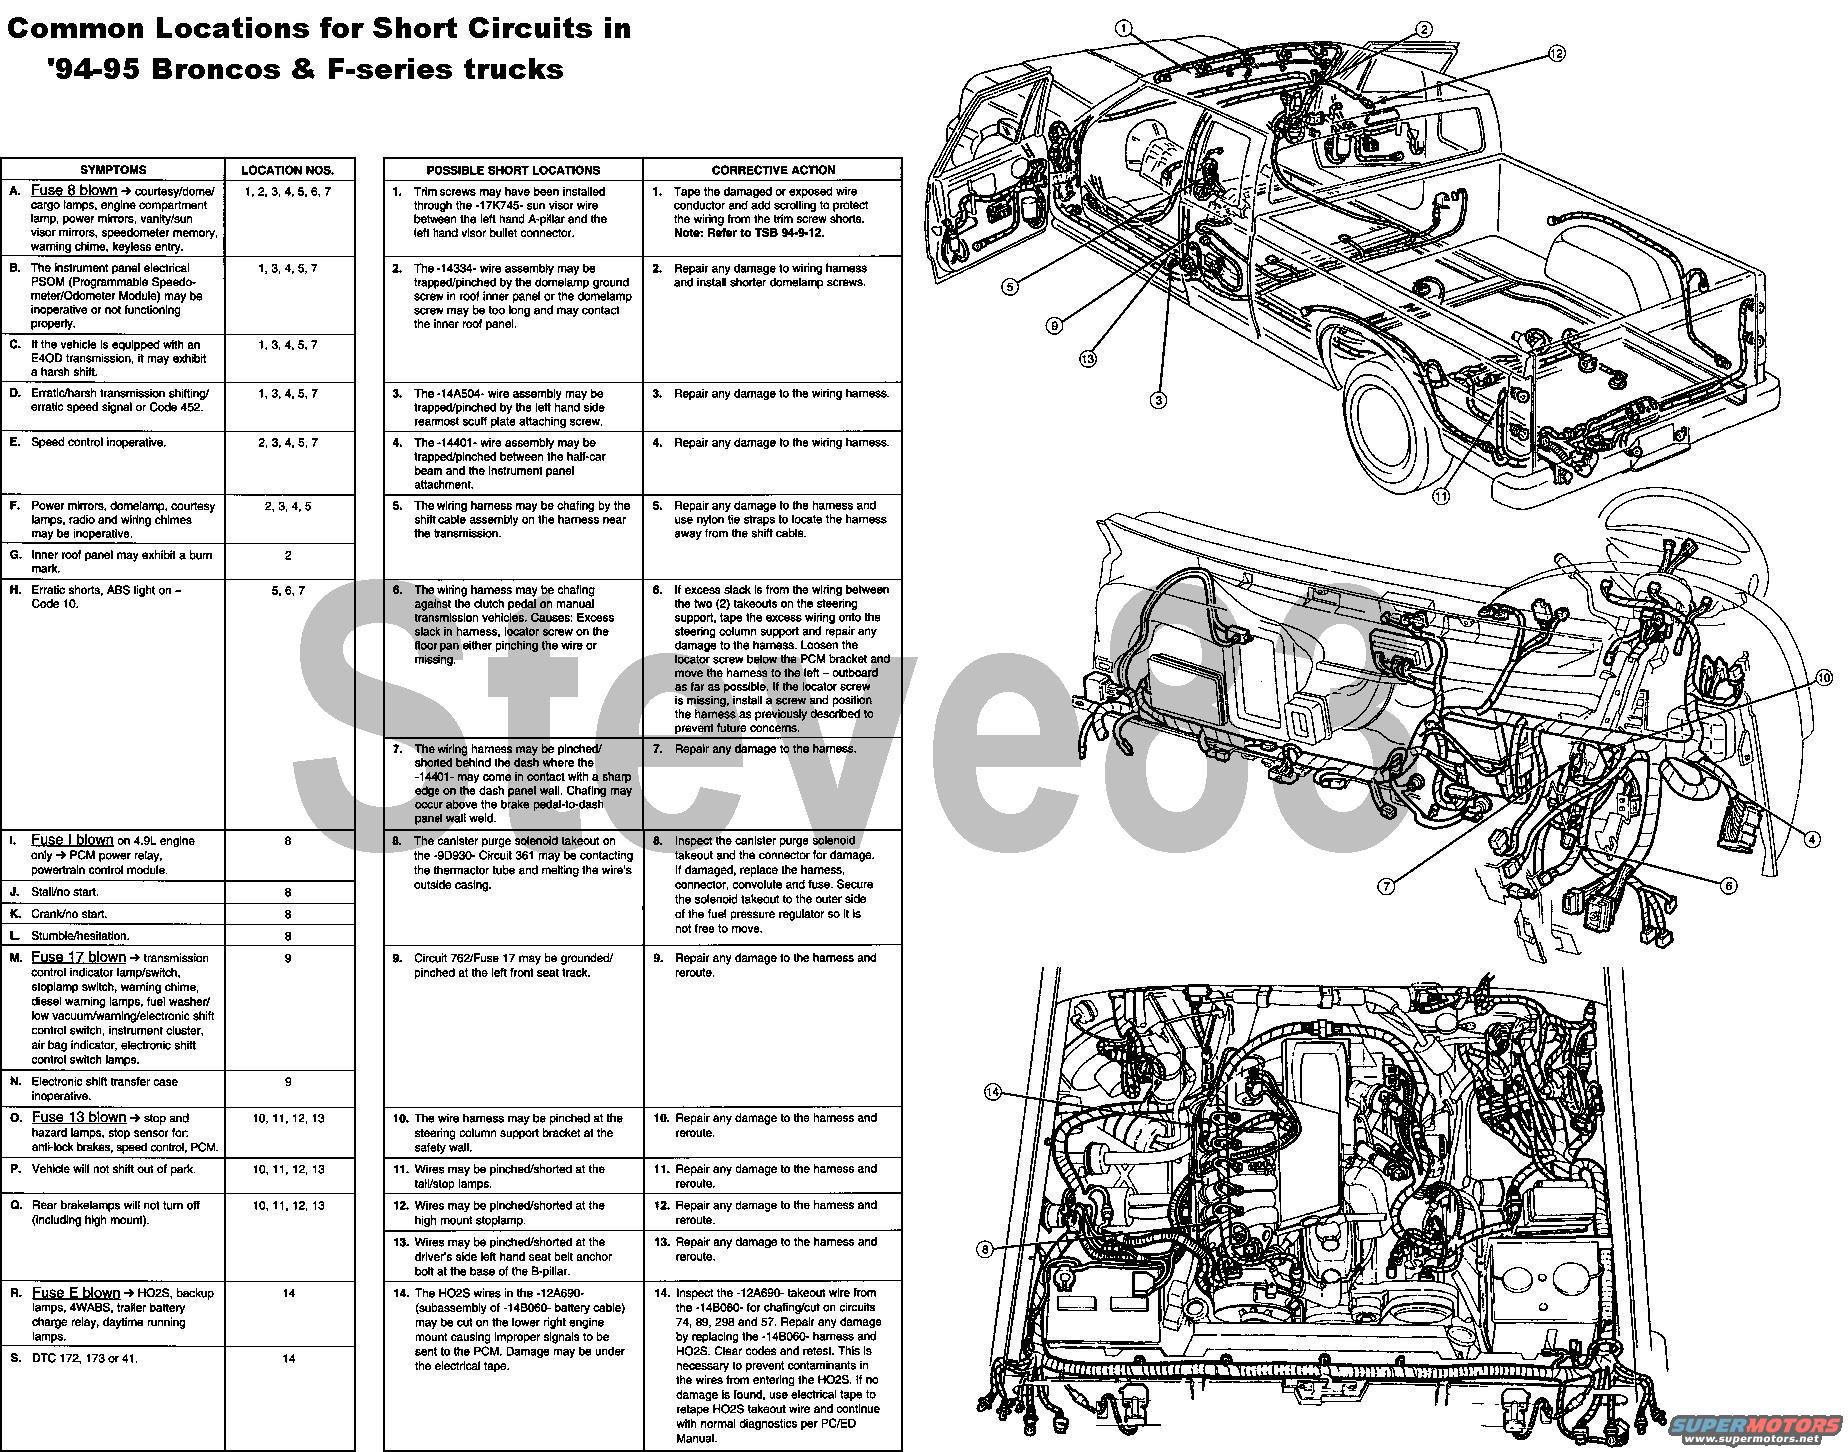 1996 Ford bronco fuel pump problems #2